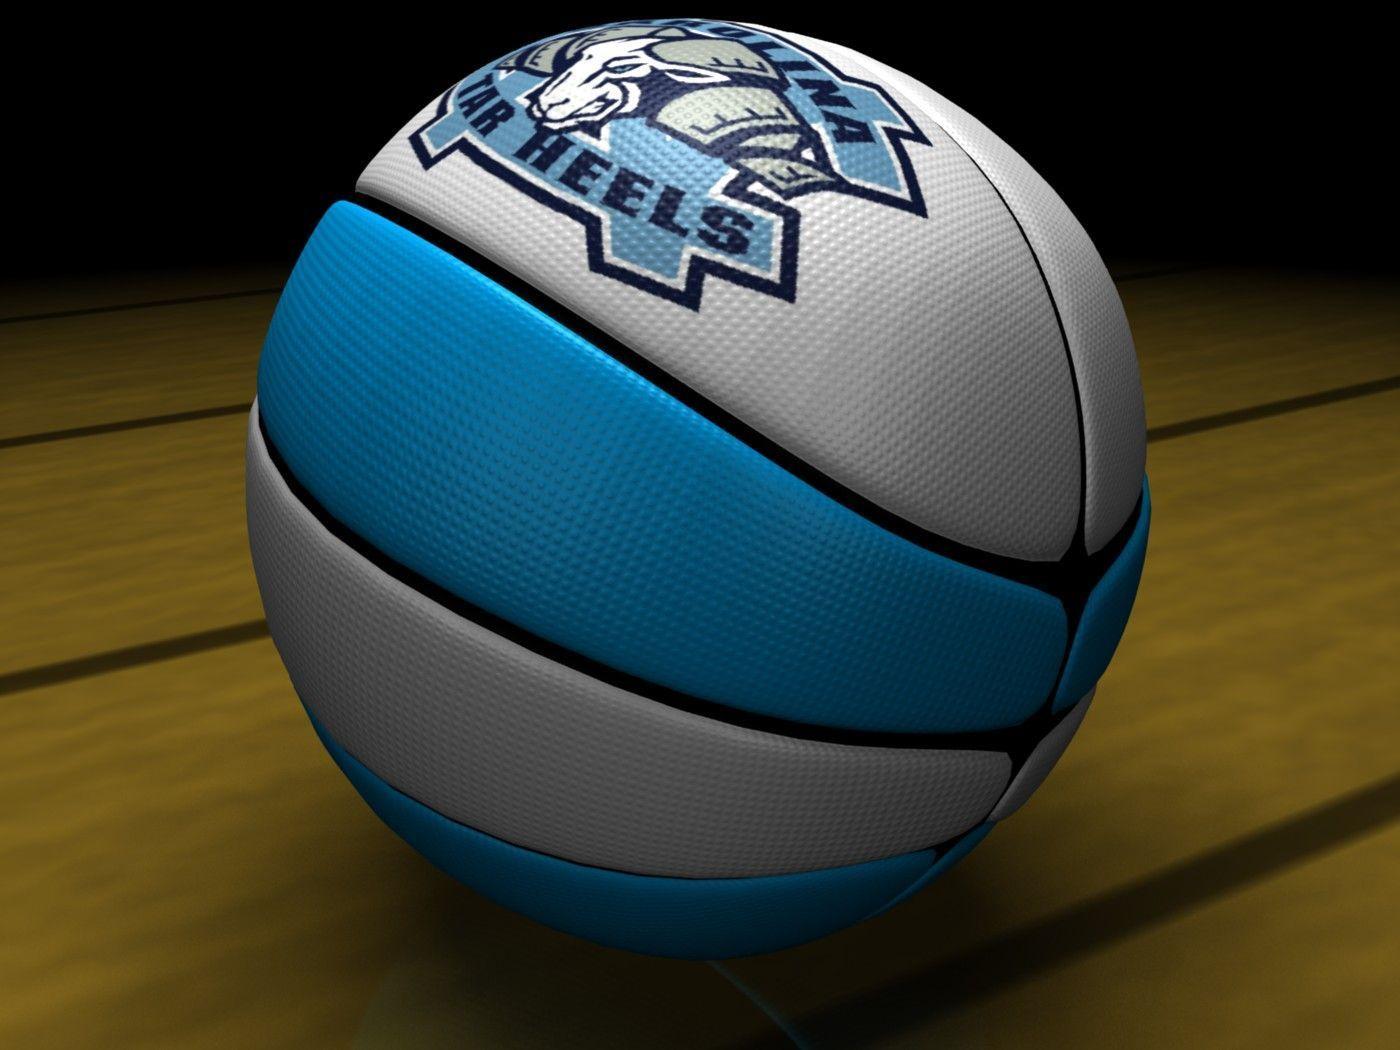 image For > Unc Basketball Desktop Wallpaper